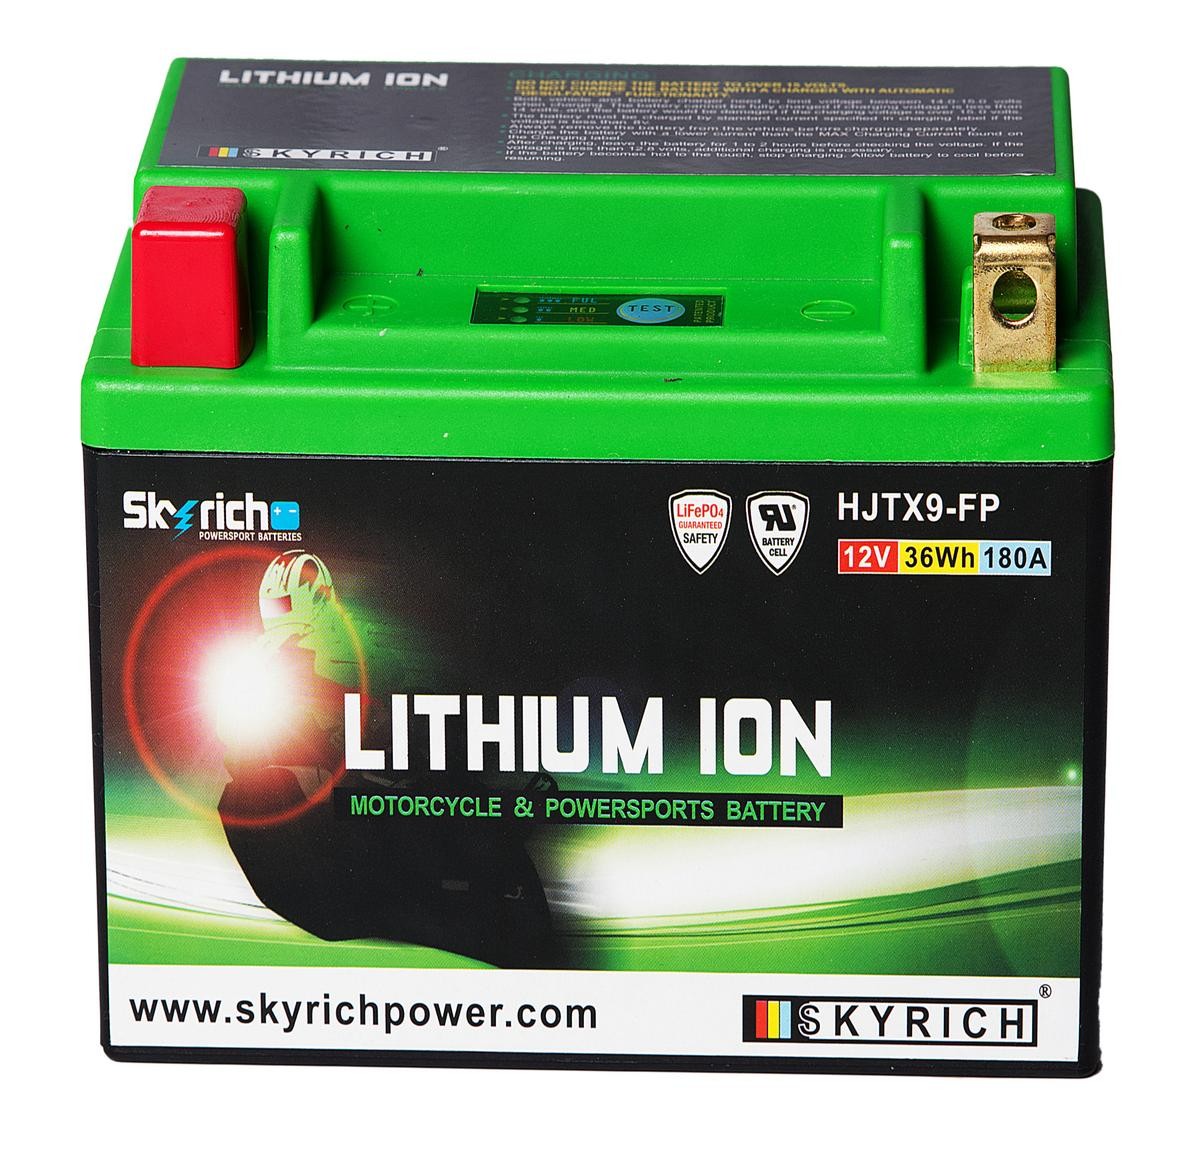 SKYRICH LITHIUM ION Batterie 12V 3Ah 180A N Li-Ionen-Batterie HJTX9-FP HONDA Mofa Maxi-Scooter